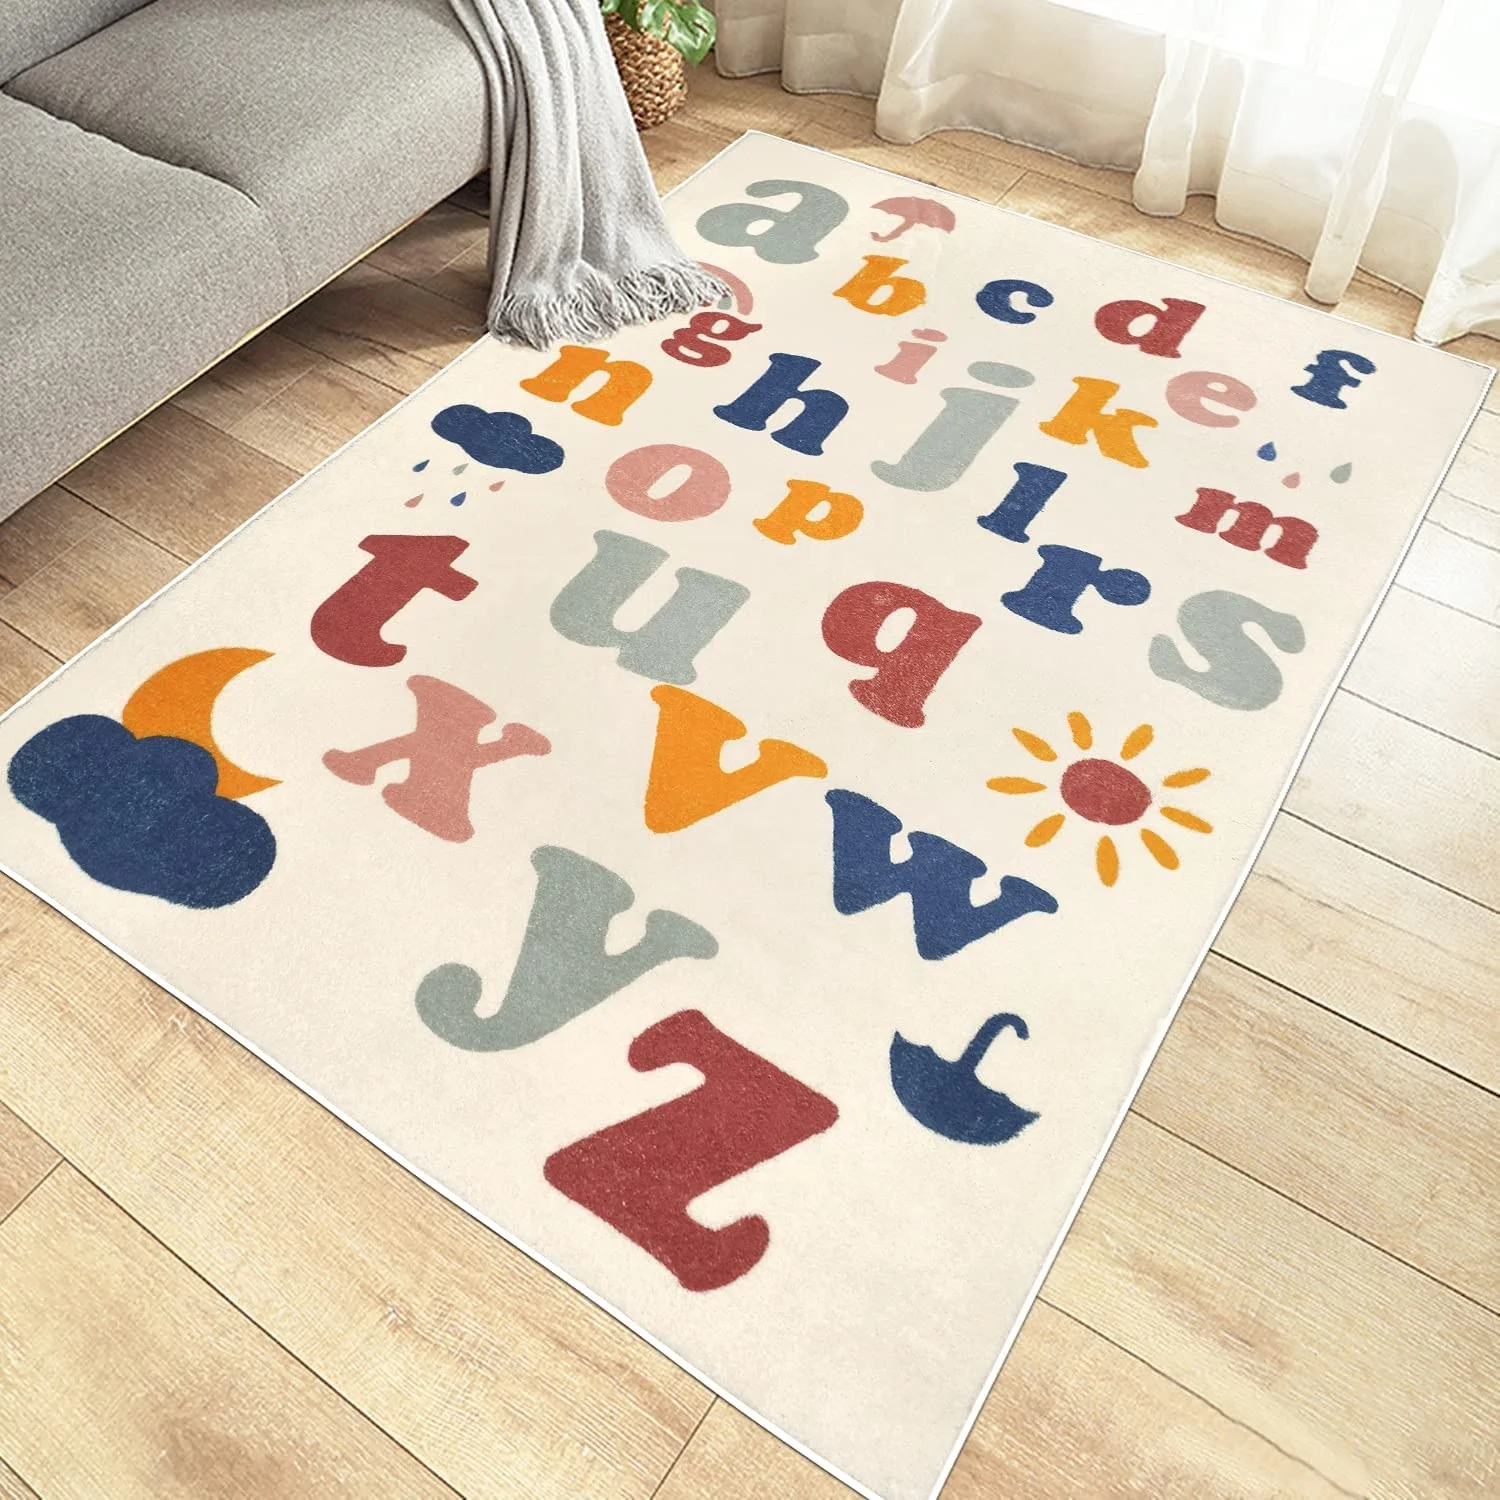 Baby Play Mat with Non-Slip Backing, 1.2 Thick Memory Foam Soft Padded  Carpet for Living Room/Bedroom , 5x7 ft Rug for Kids, Toddler, Children